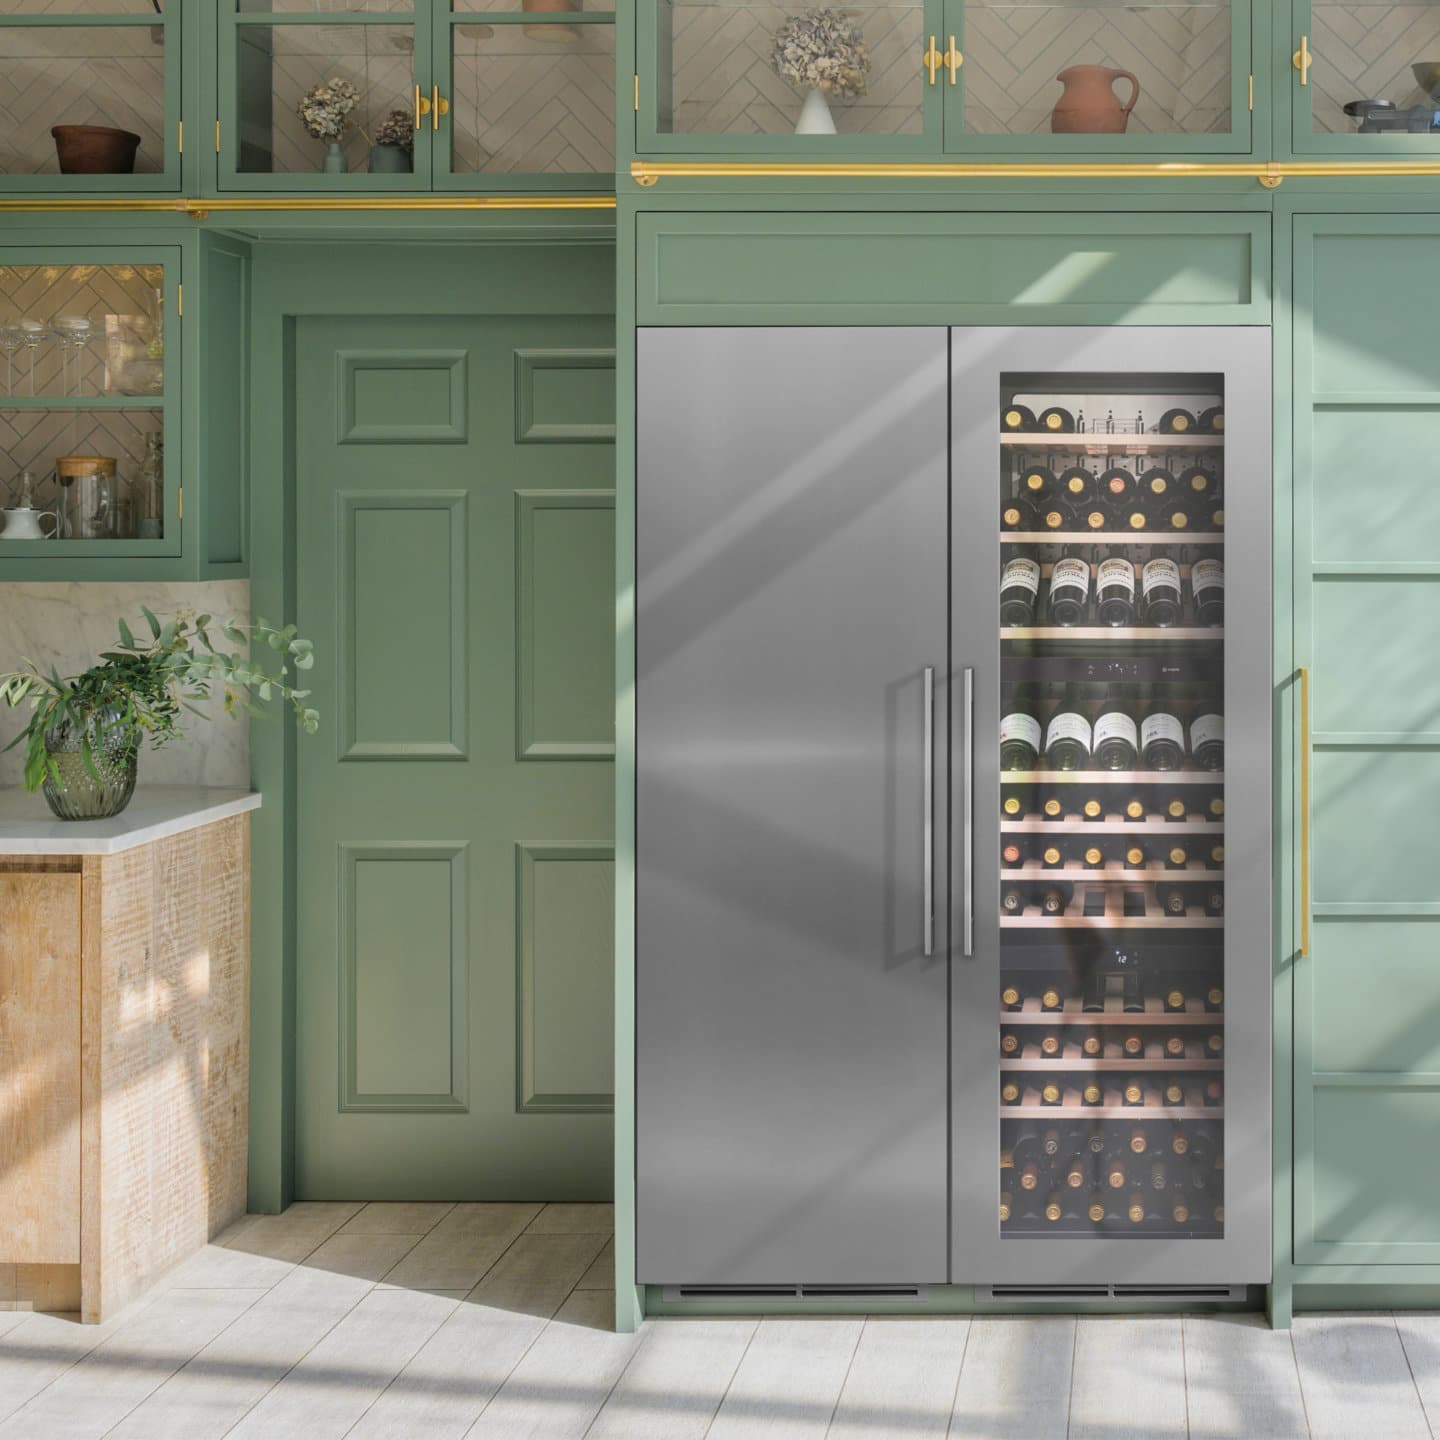 american fridge with wine cooler